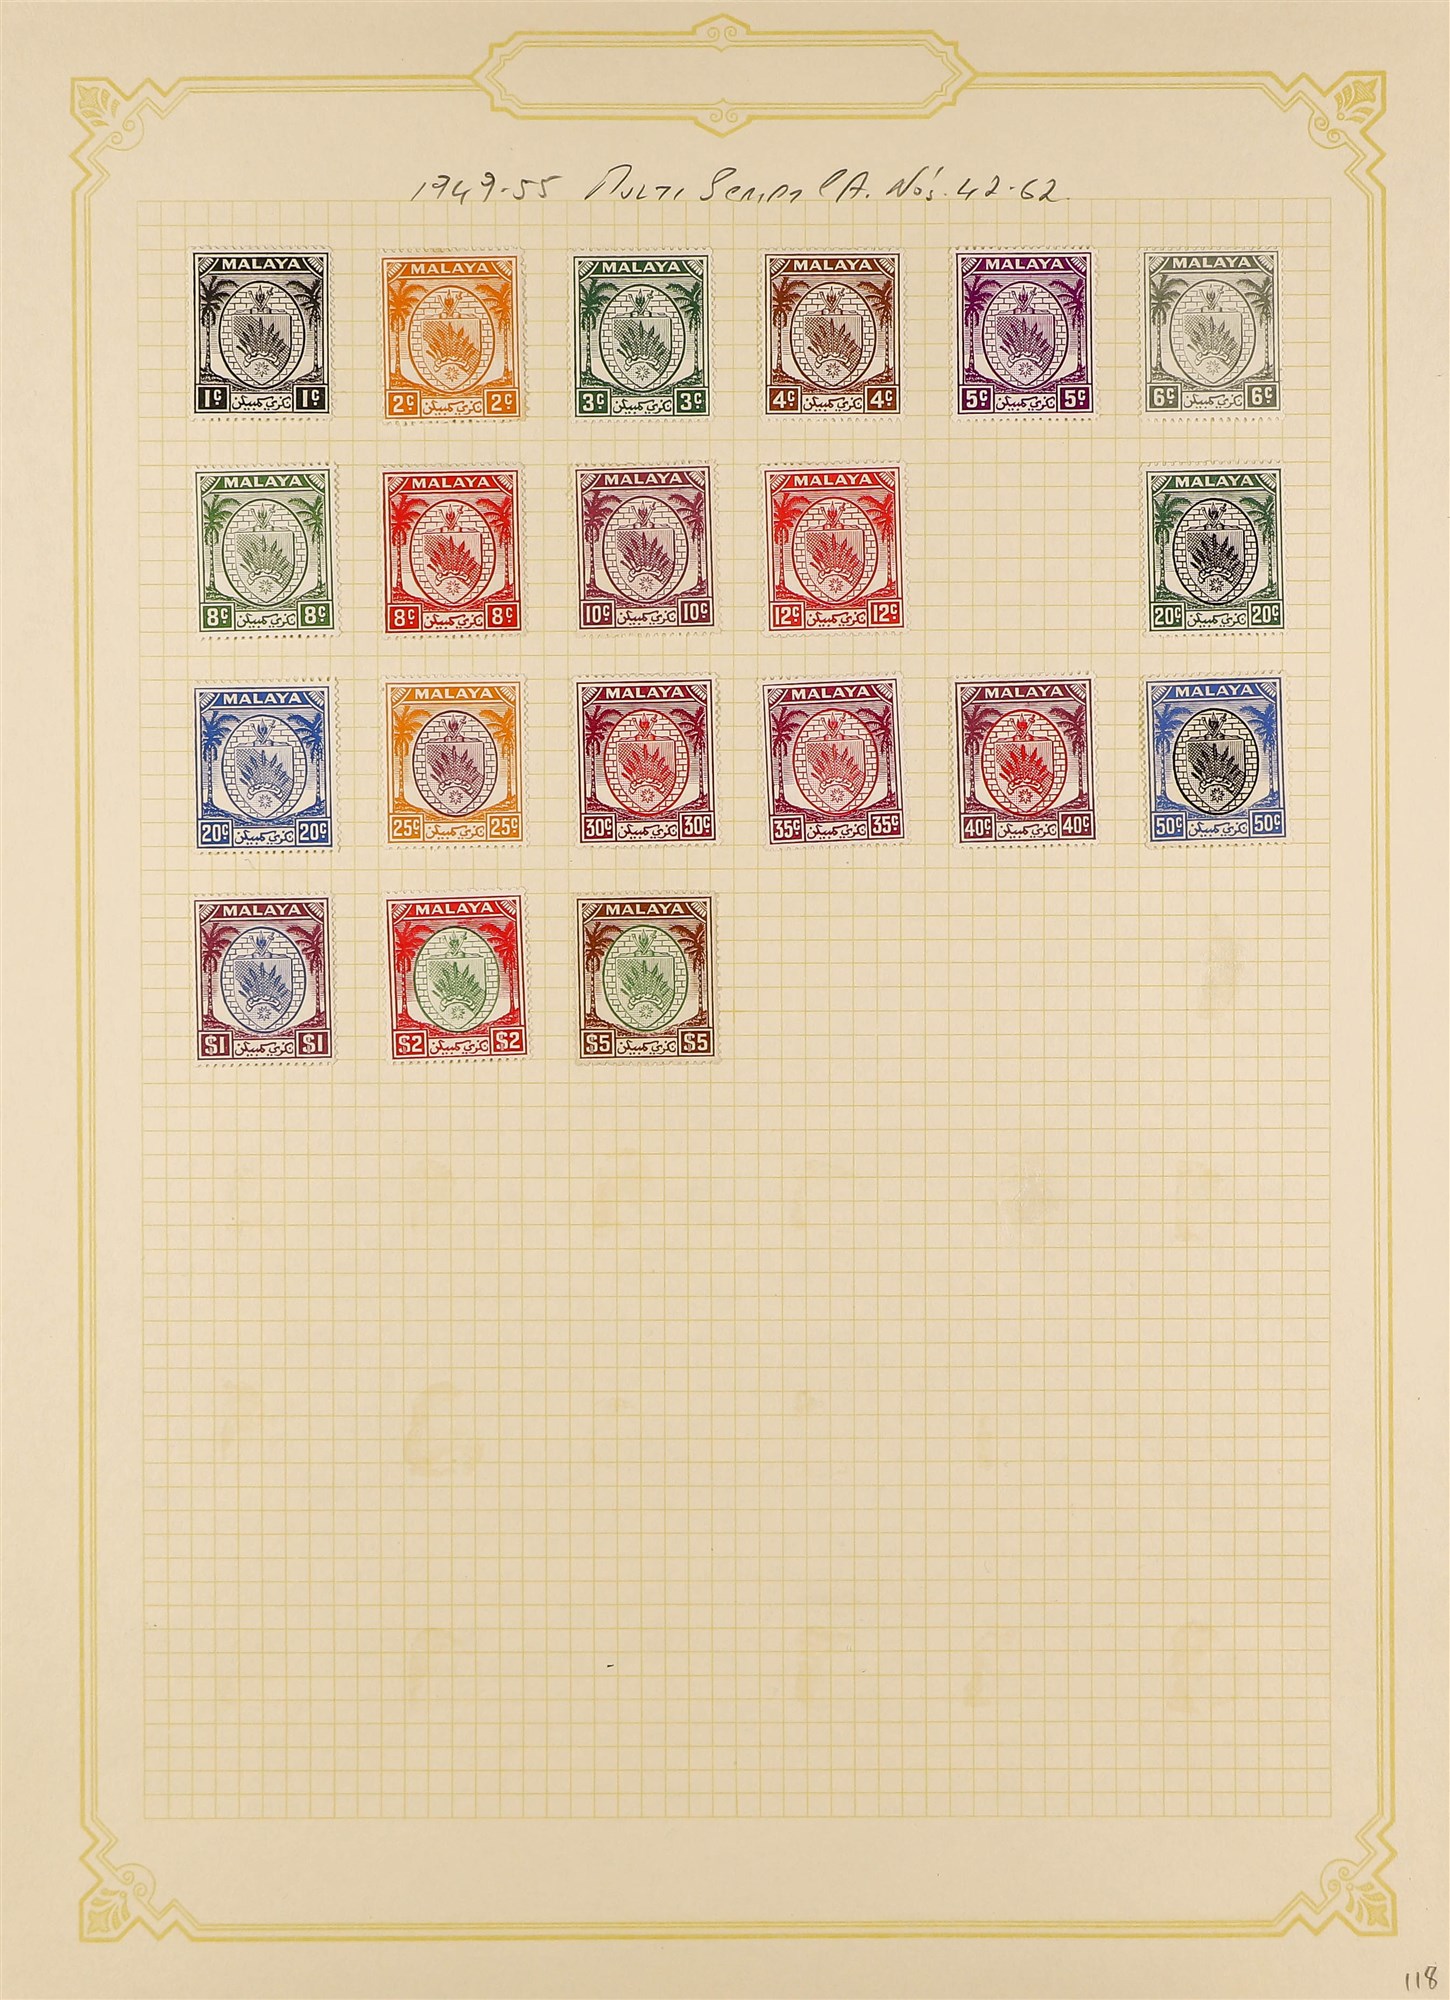 MALAYA STATES NEGRI SEMBILAN 1891 - 1949 mint on album pages incl. 1891-94 set, 1895-99 set to 10c & - Image 3 of 3